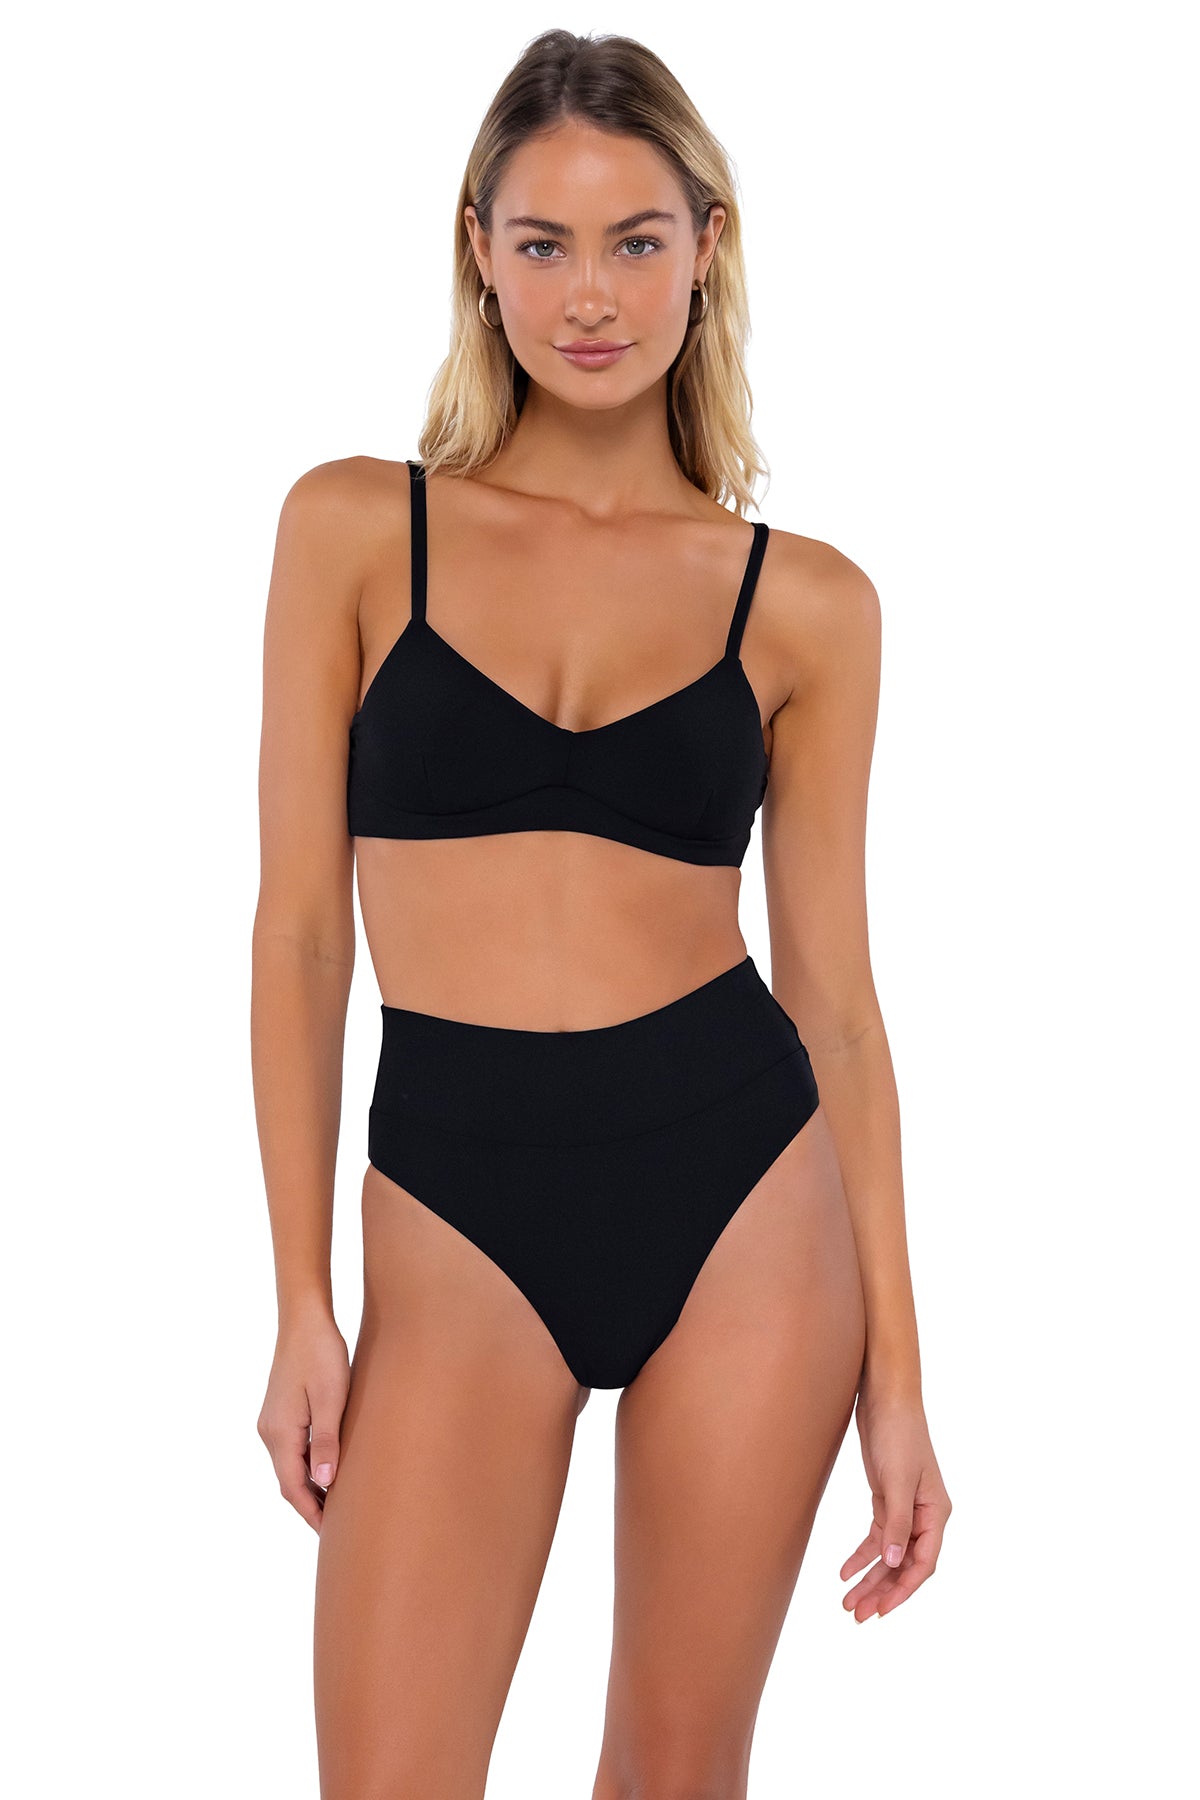 Front pose #1 of Jessica wearing Swim Systems Black Tatum Bottom with matching Annalee Underwire bikini top